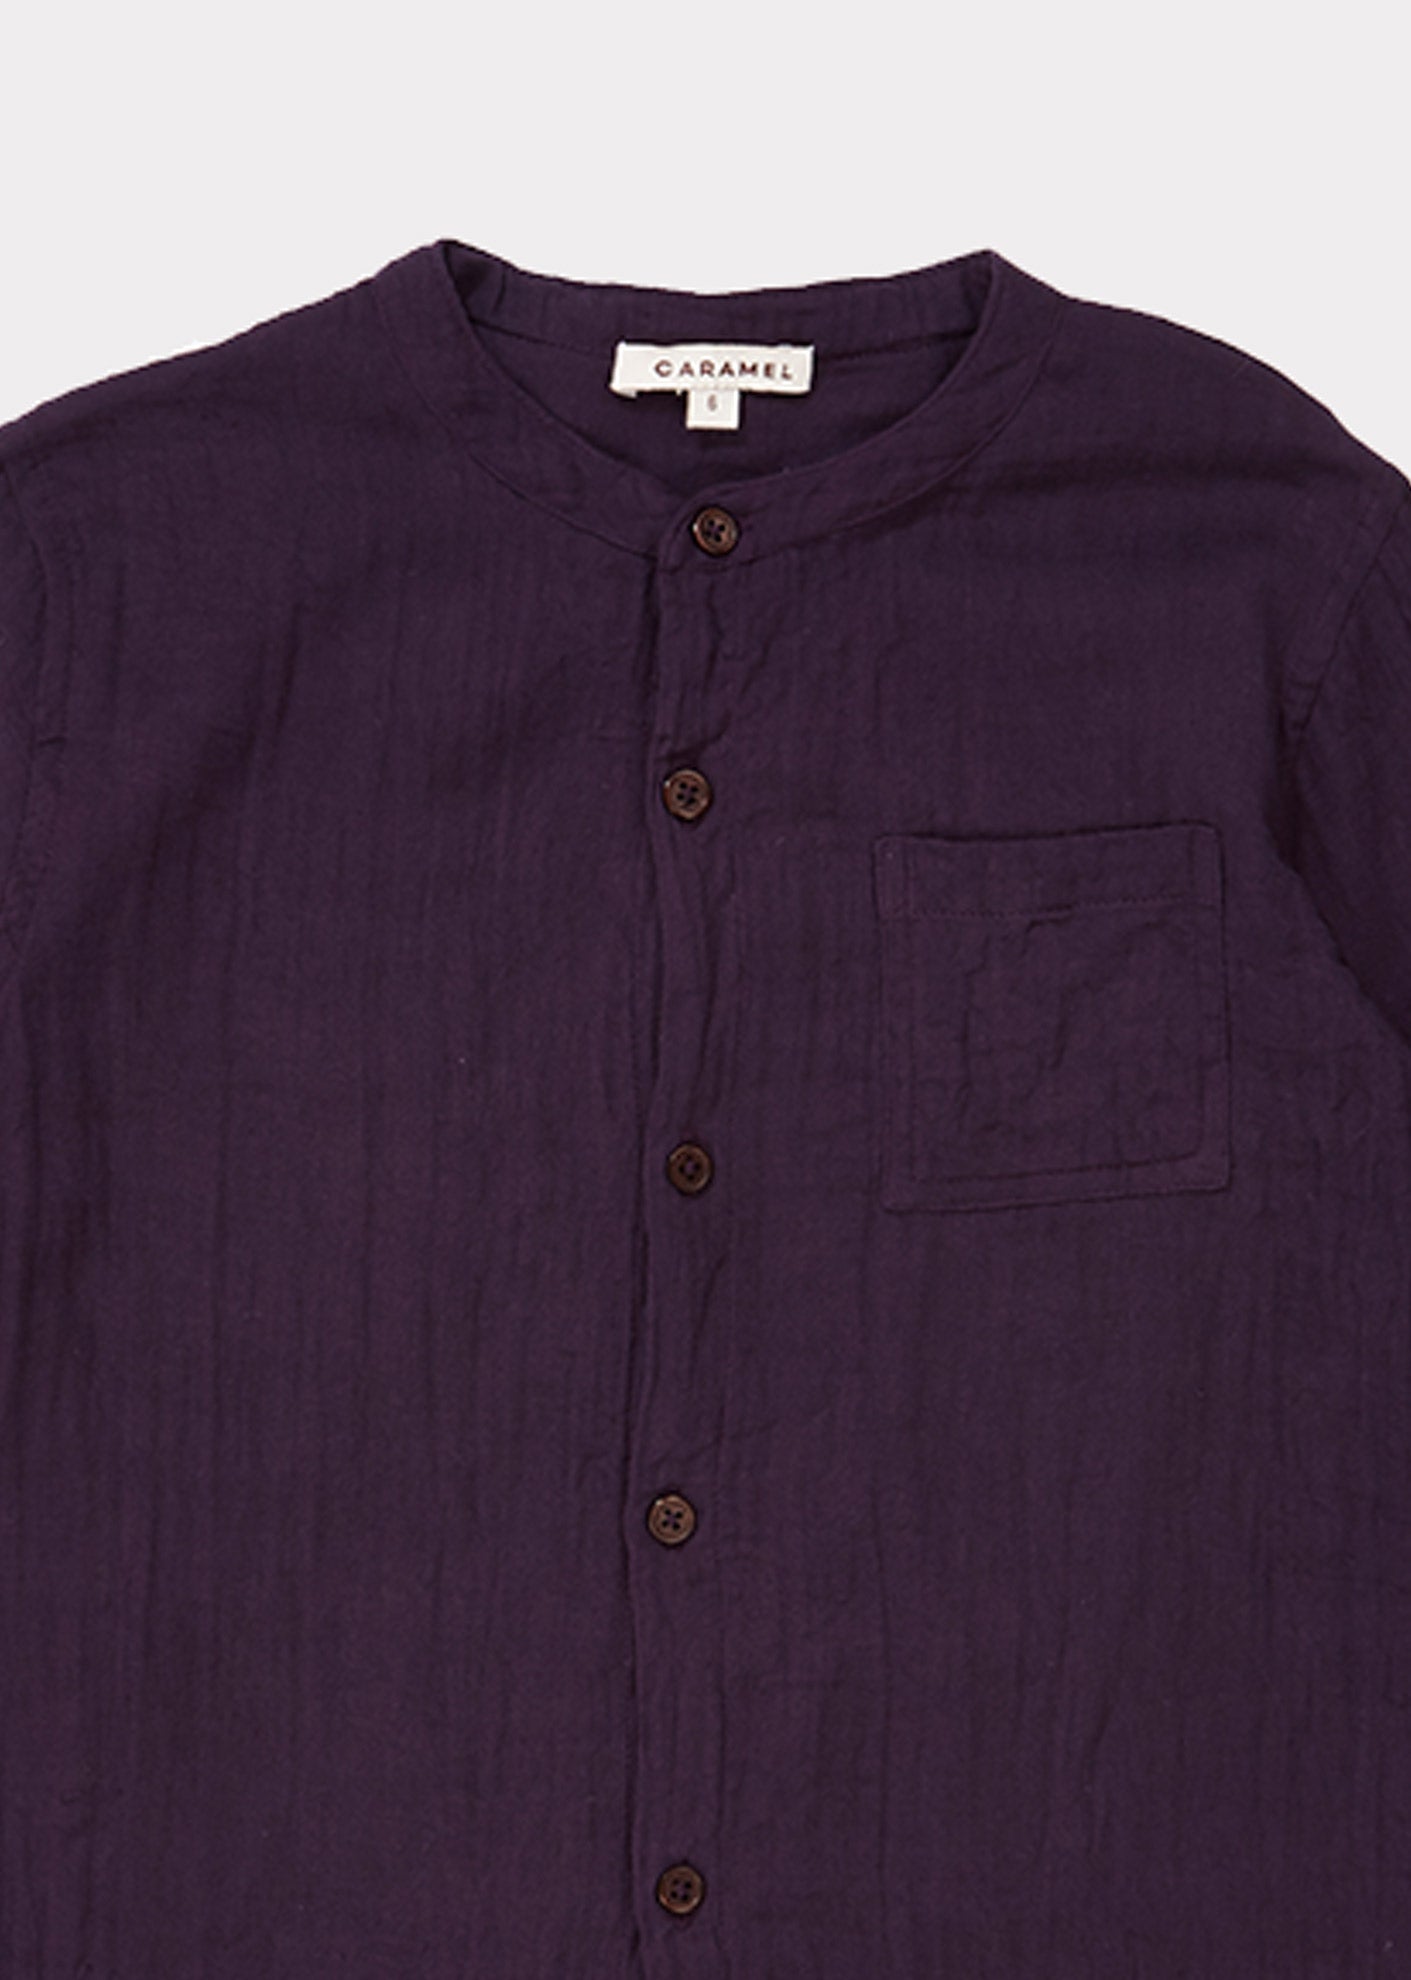 Girls Purple Cotton Shirt